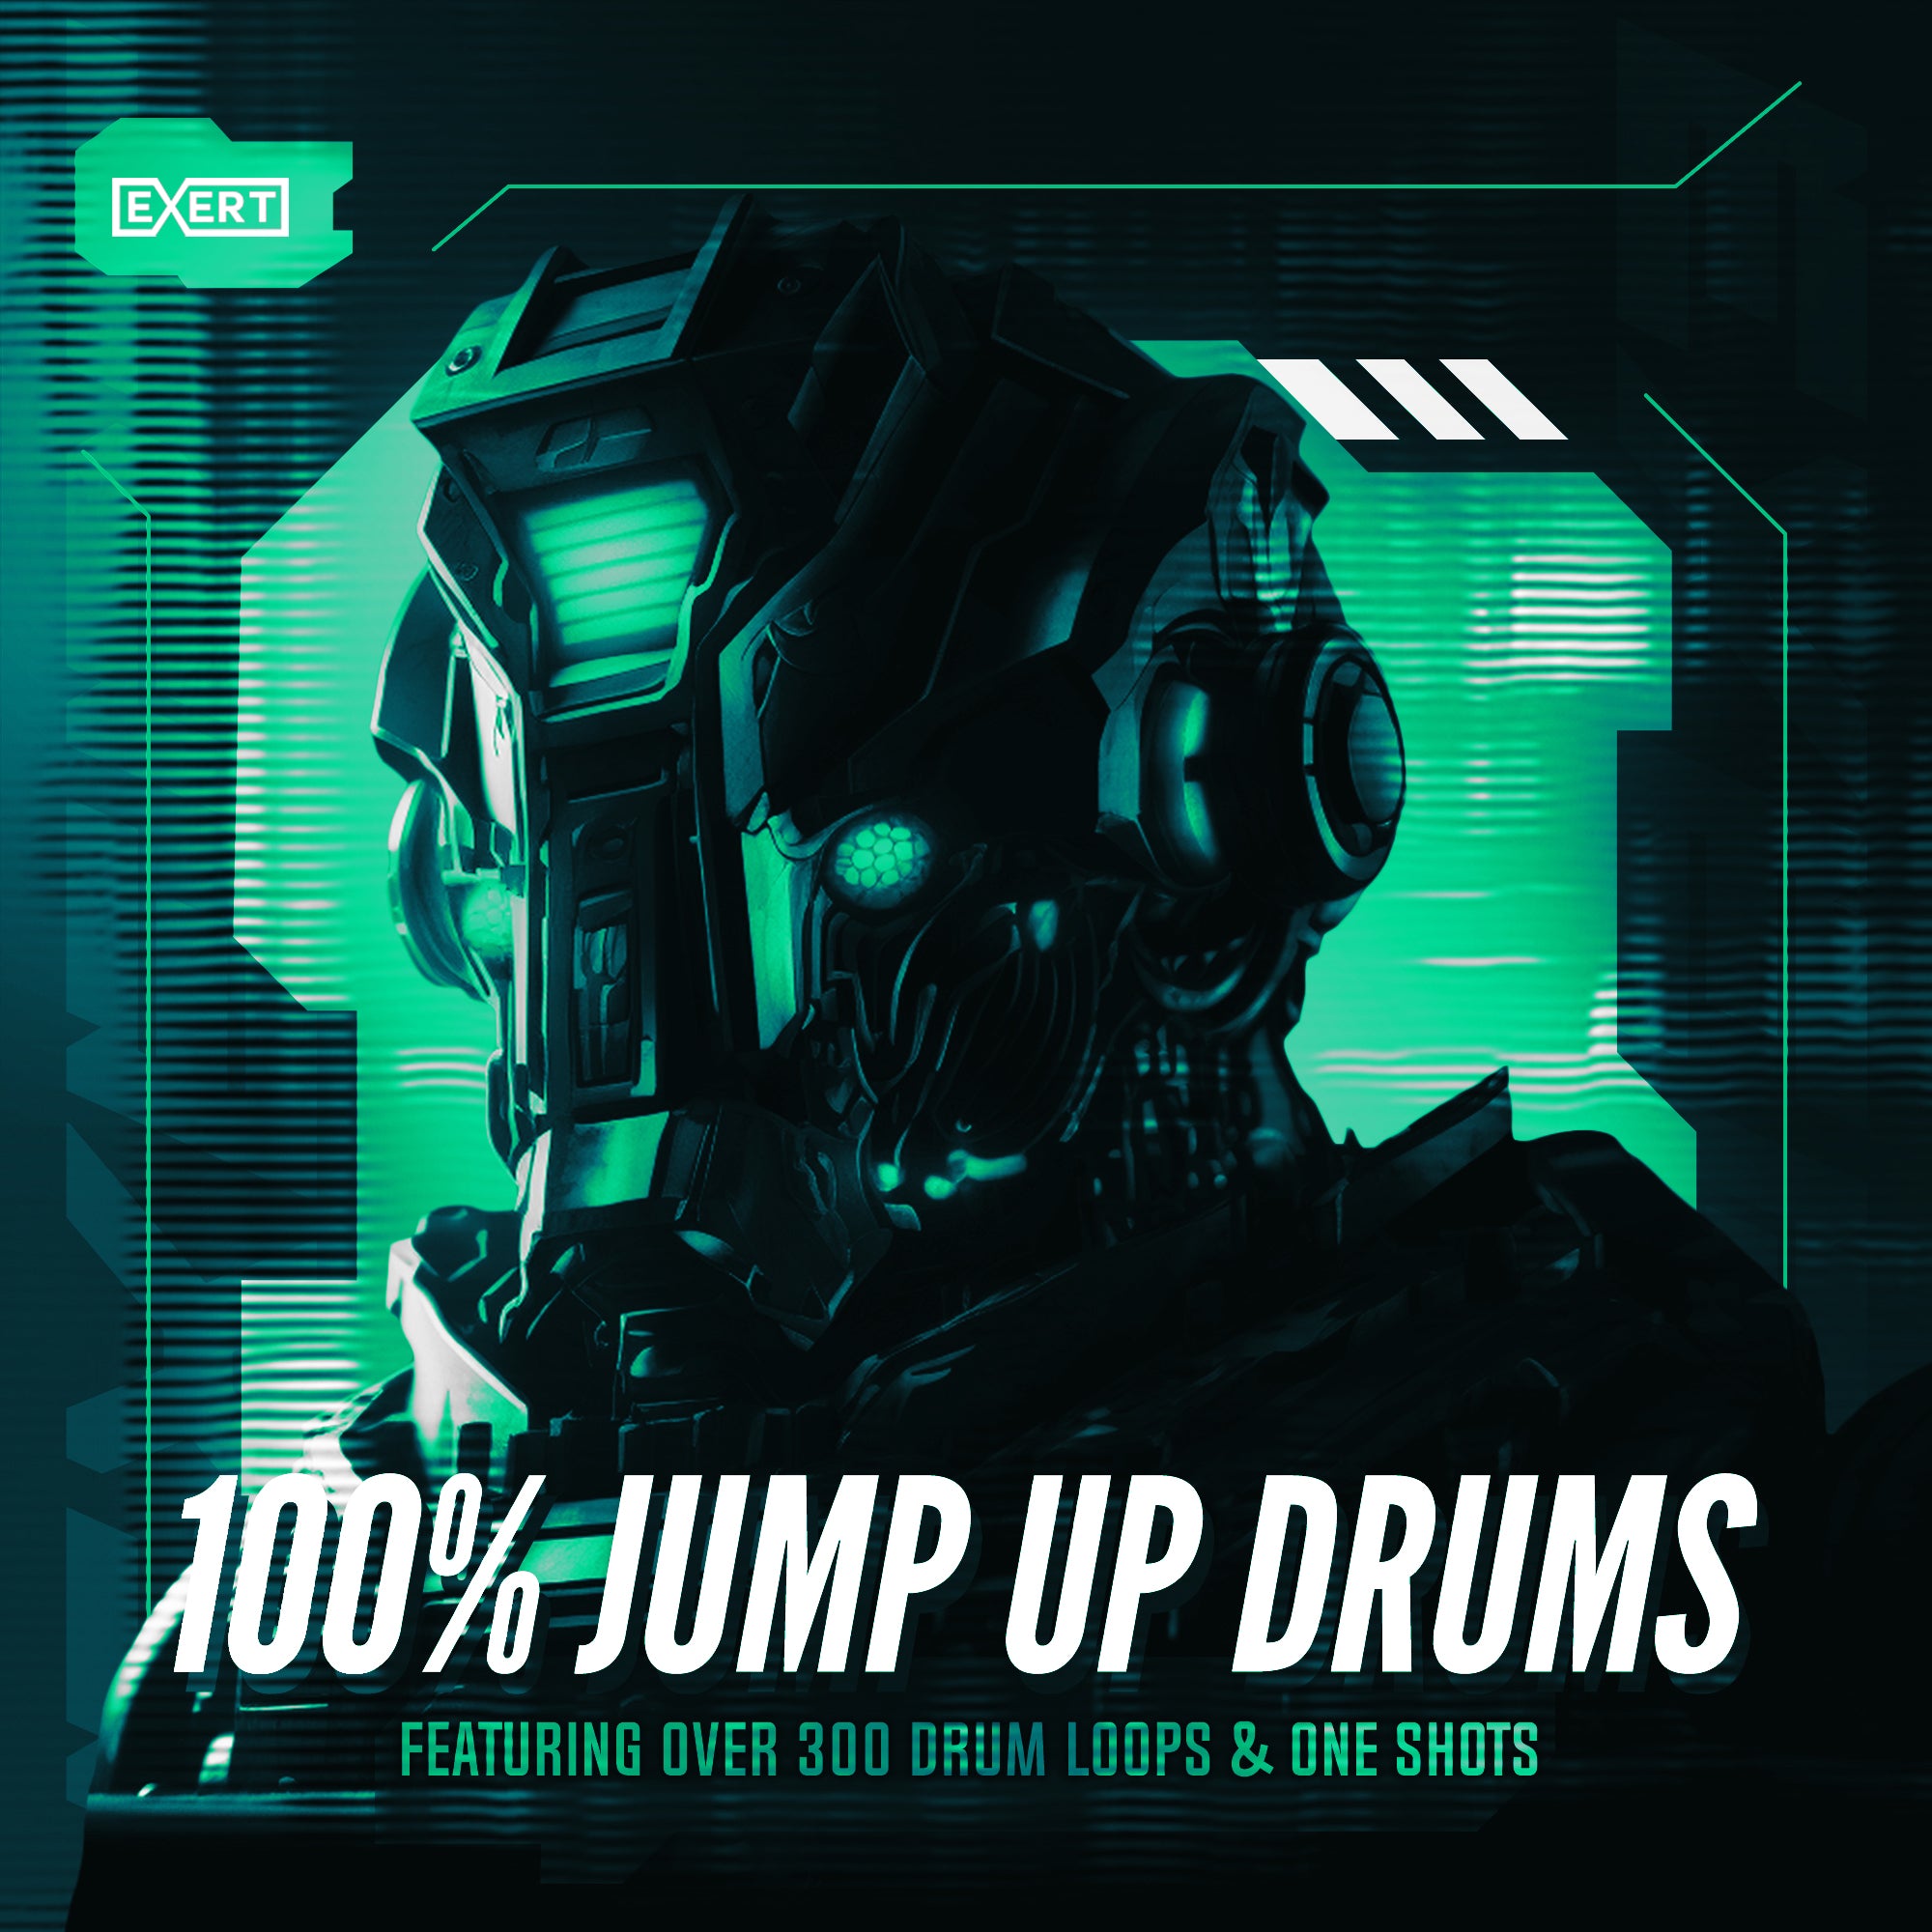 Exert Records - 100% Jump Up Drums